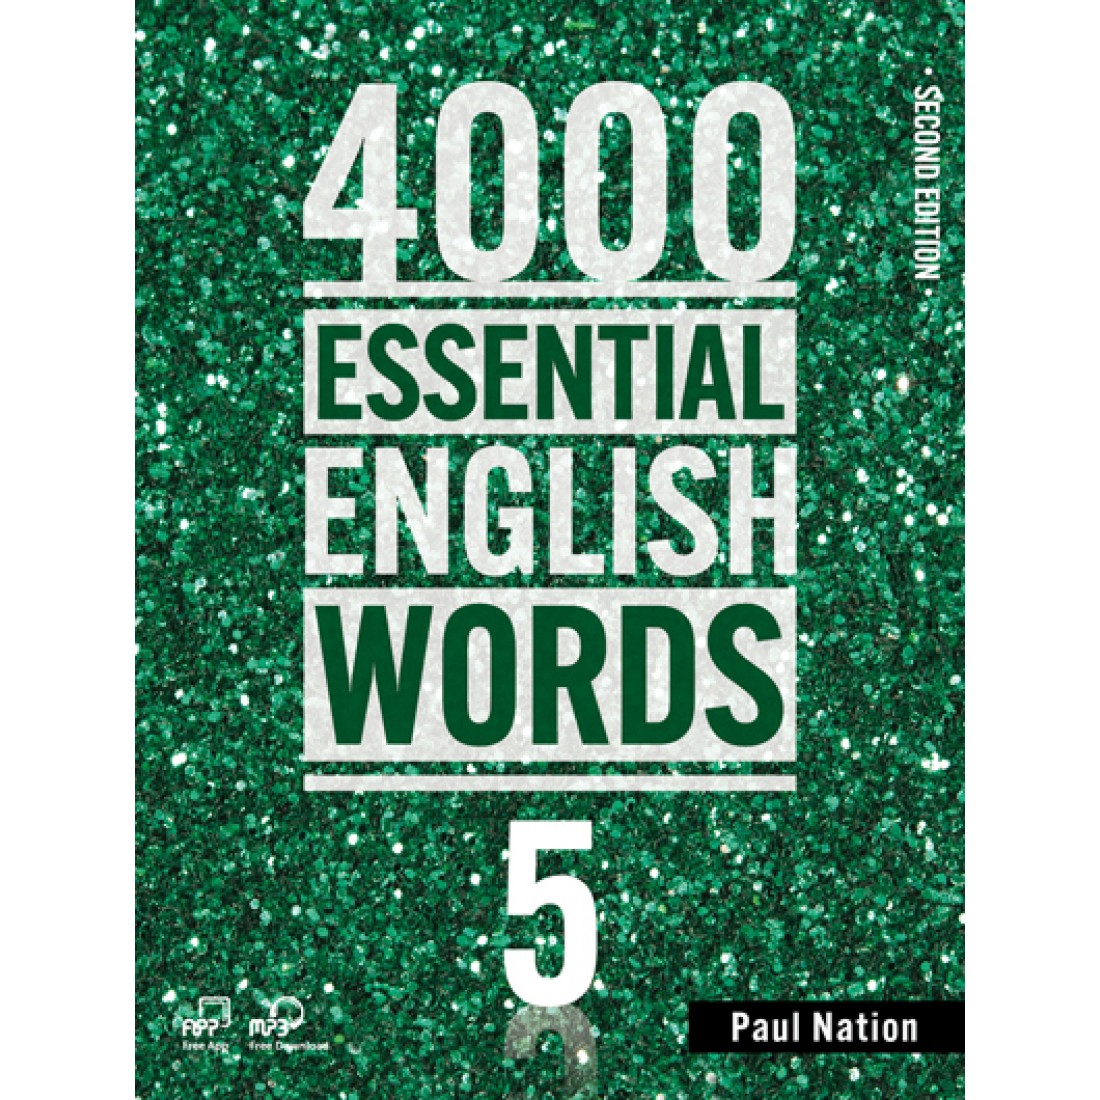 Essential words 3. 4000 Essential English Words книги. 4000 Essential English Words 1. 4000 Essential English Words 5. 4000 Essential English Words 2.